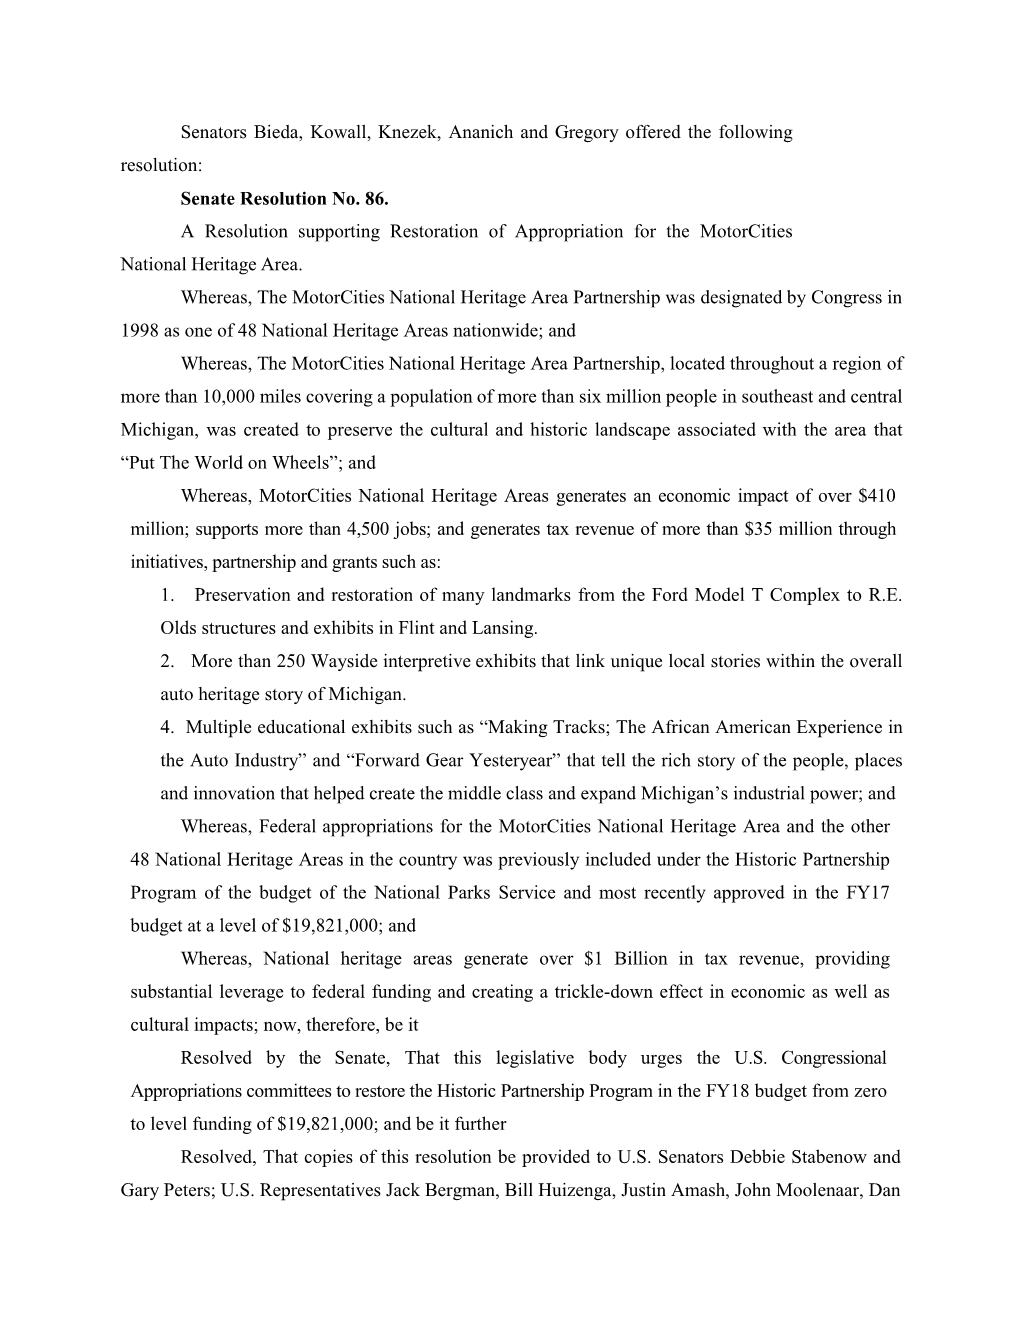 Senators Bieda, Kowall, Knezek, Ananich and Gregory Offered the Following Resolution: Senate Resolution No